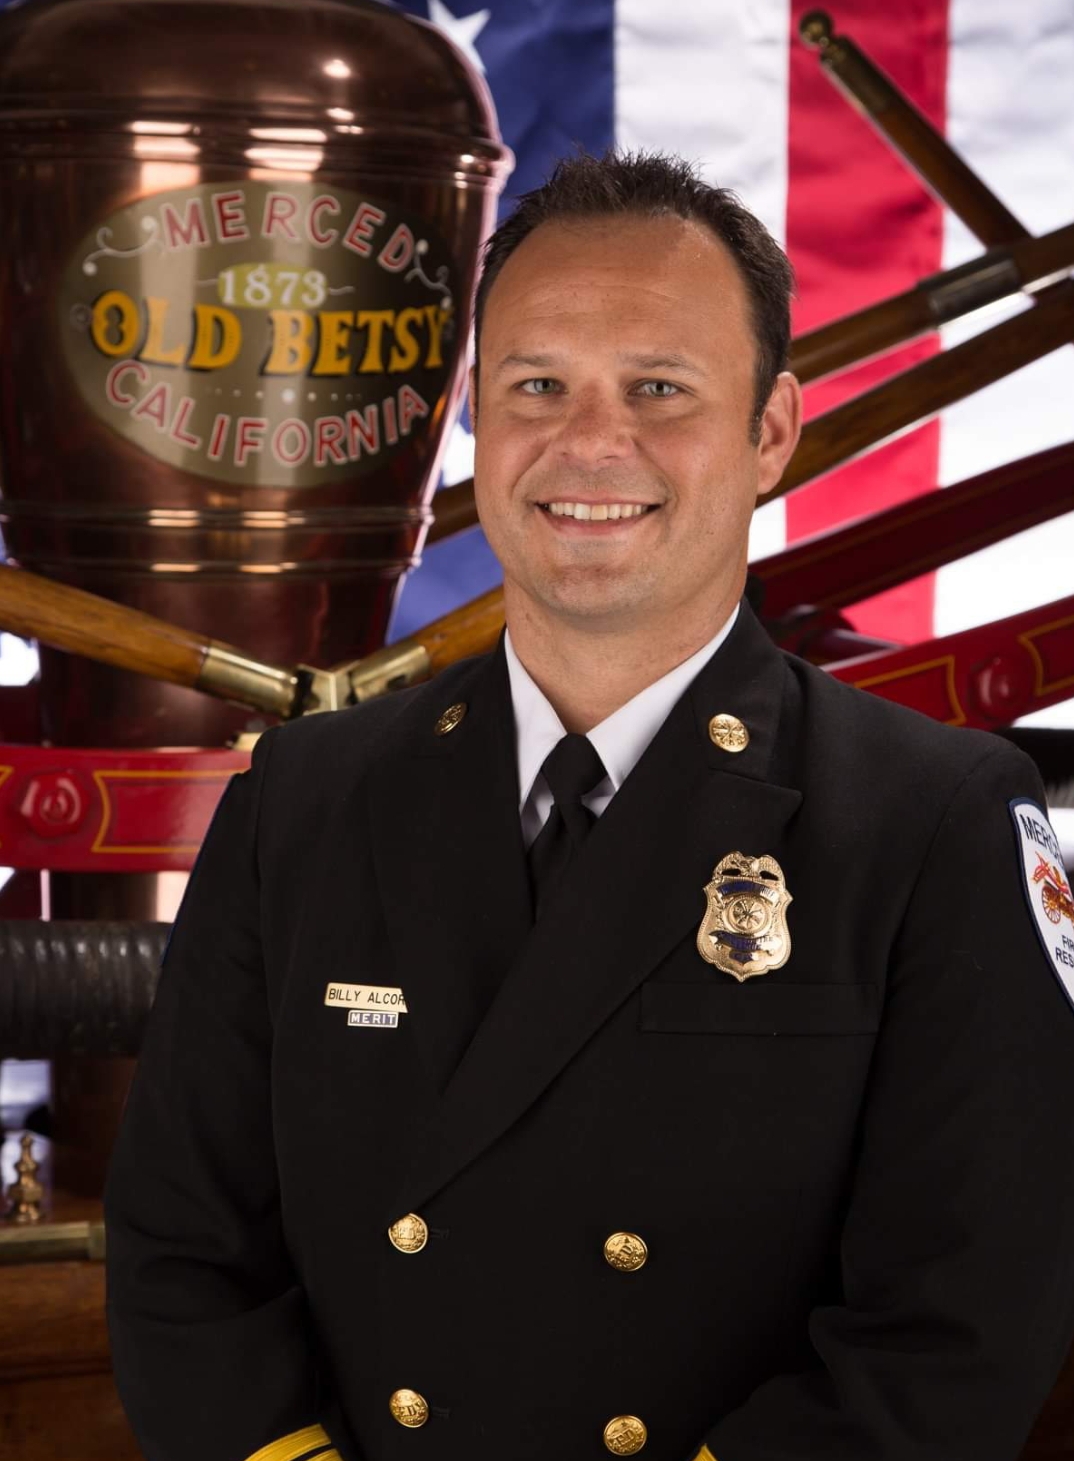 New fire chief Alcorn to replace chief Wilkinson